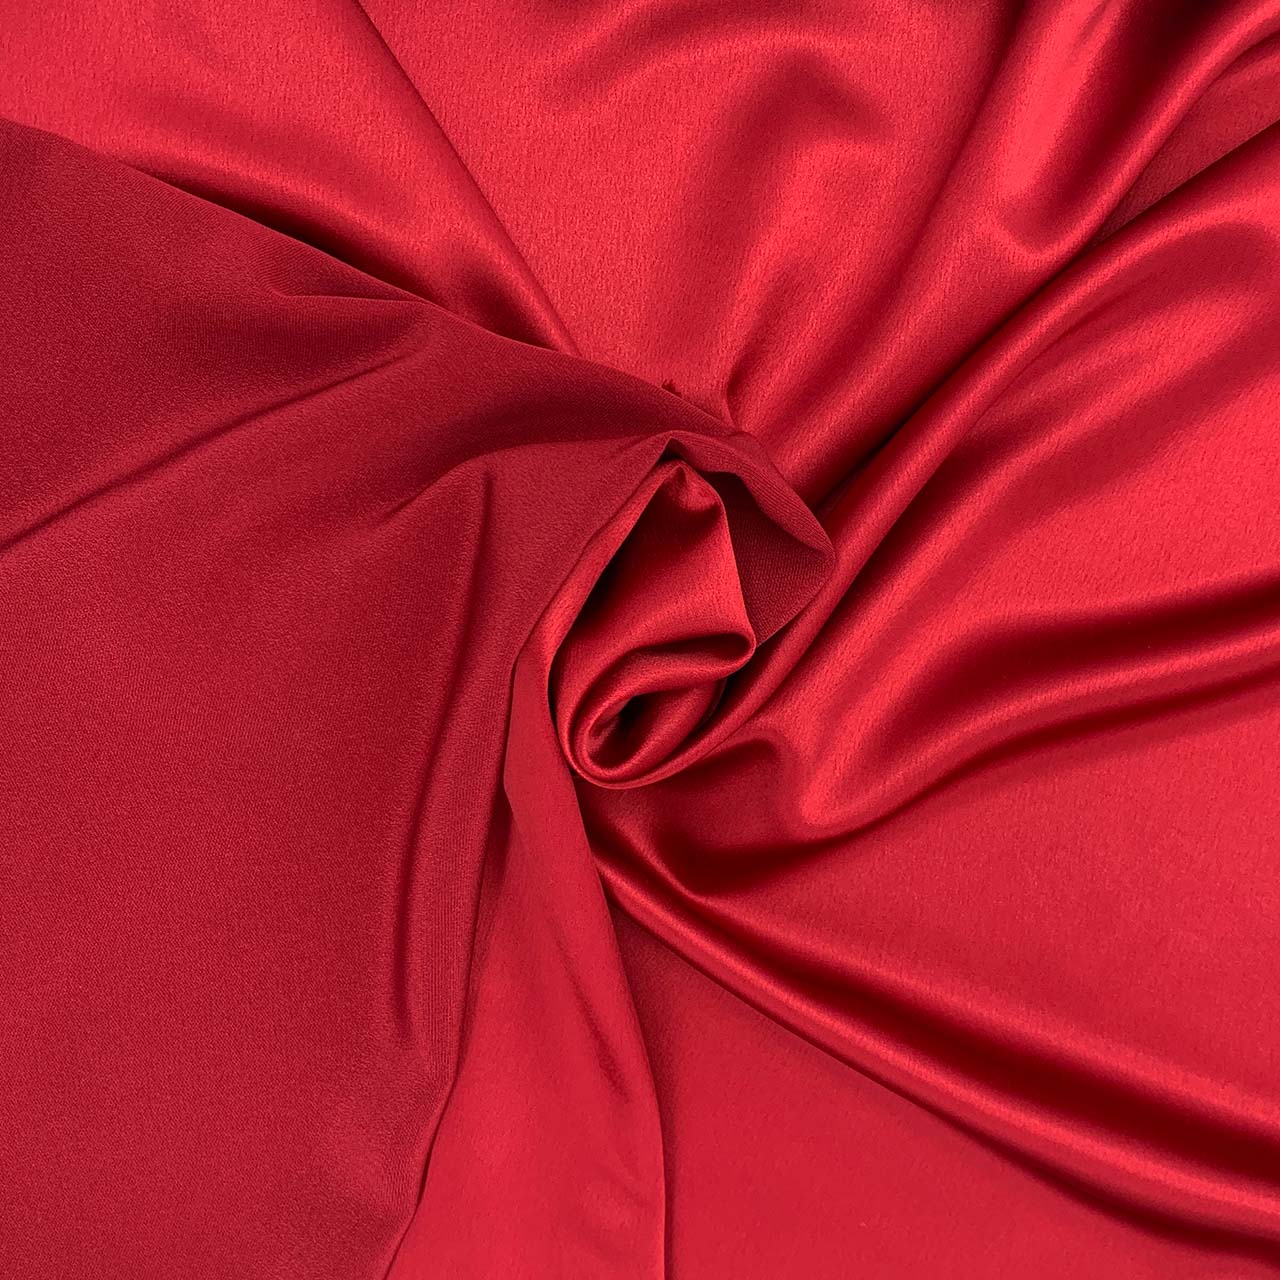 poppy red crepe fabric italian fabric collection crepe satin - Fabric Collection